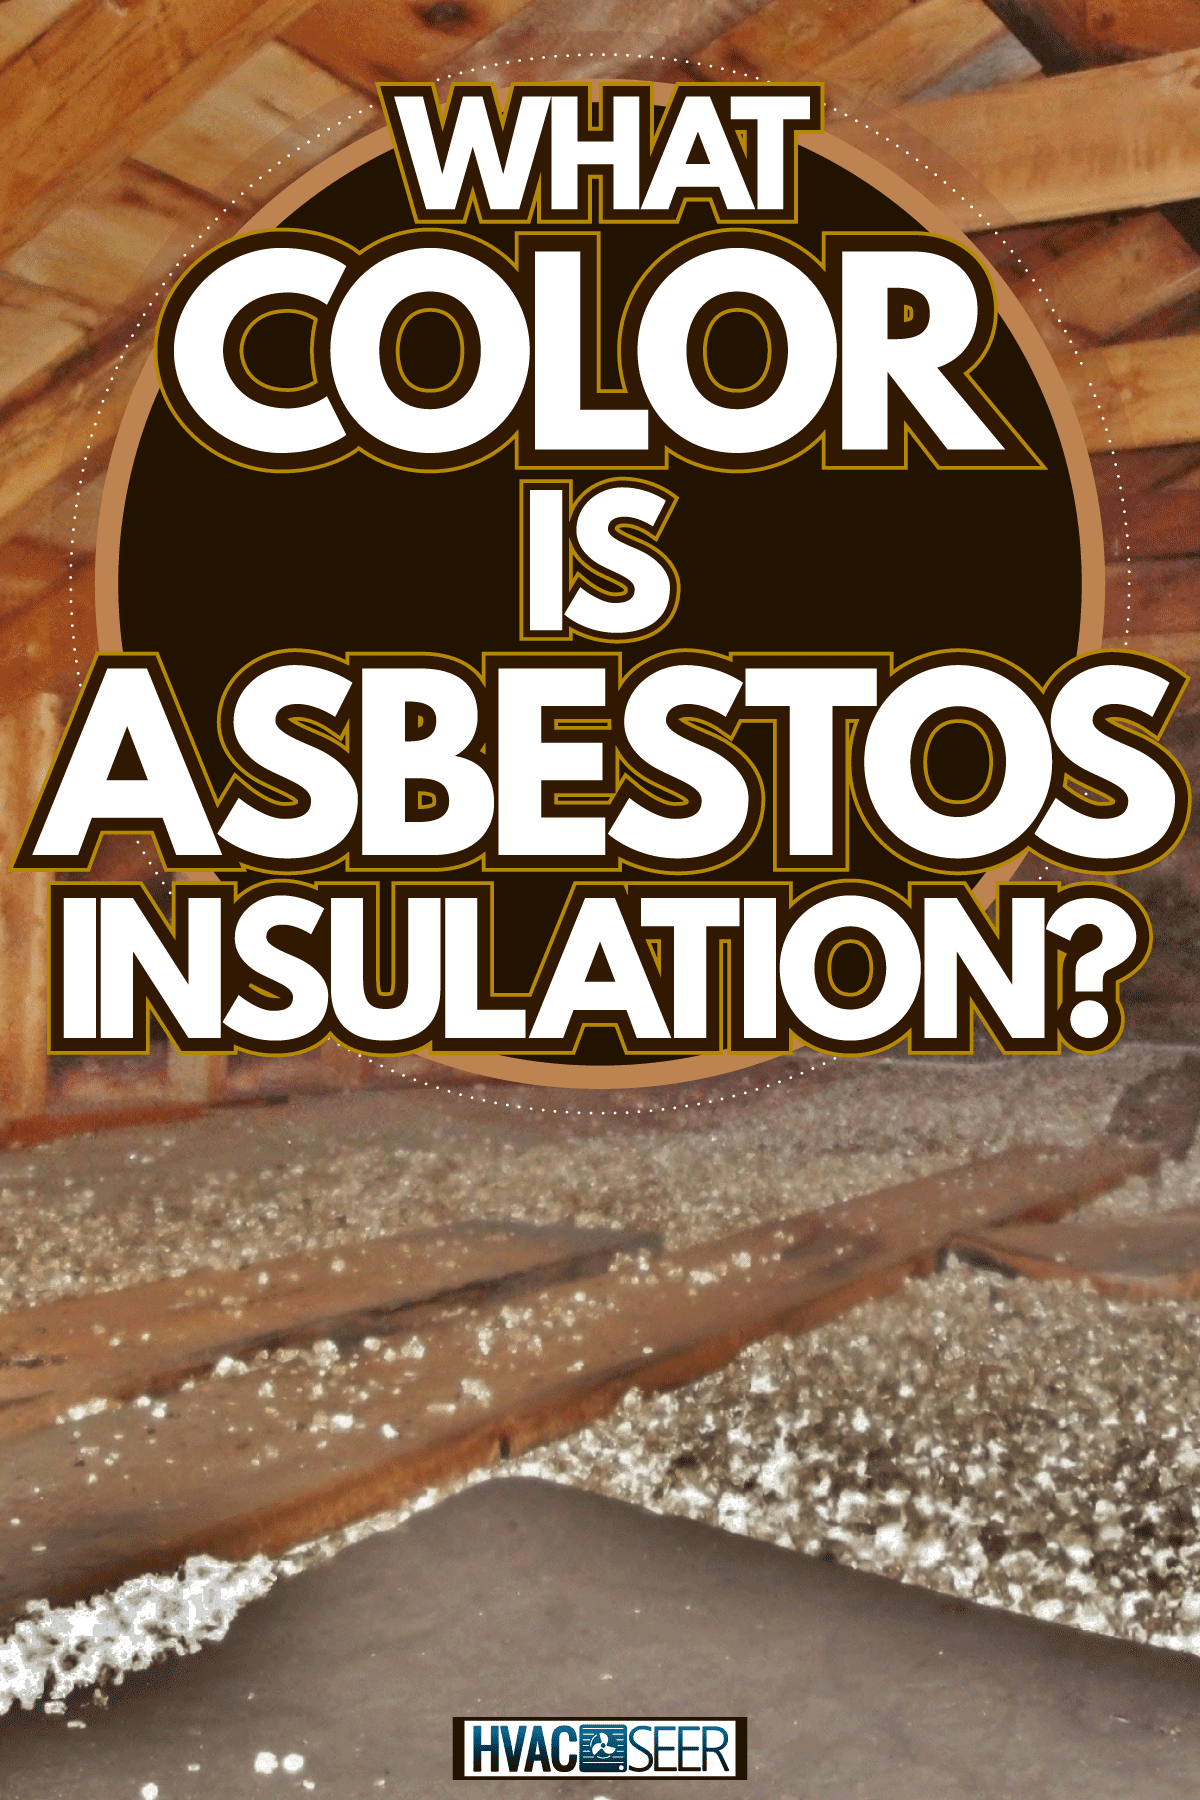 Asbestos insulation sprayed across the attic flooring, What Color Is Asbestos Insulation?